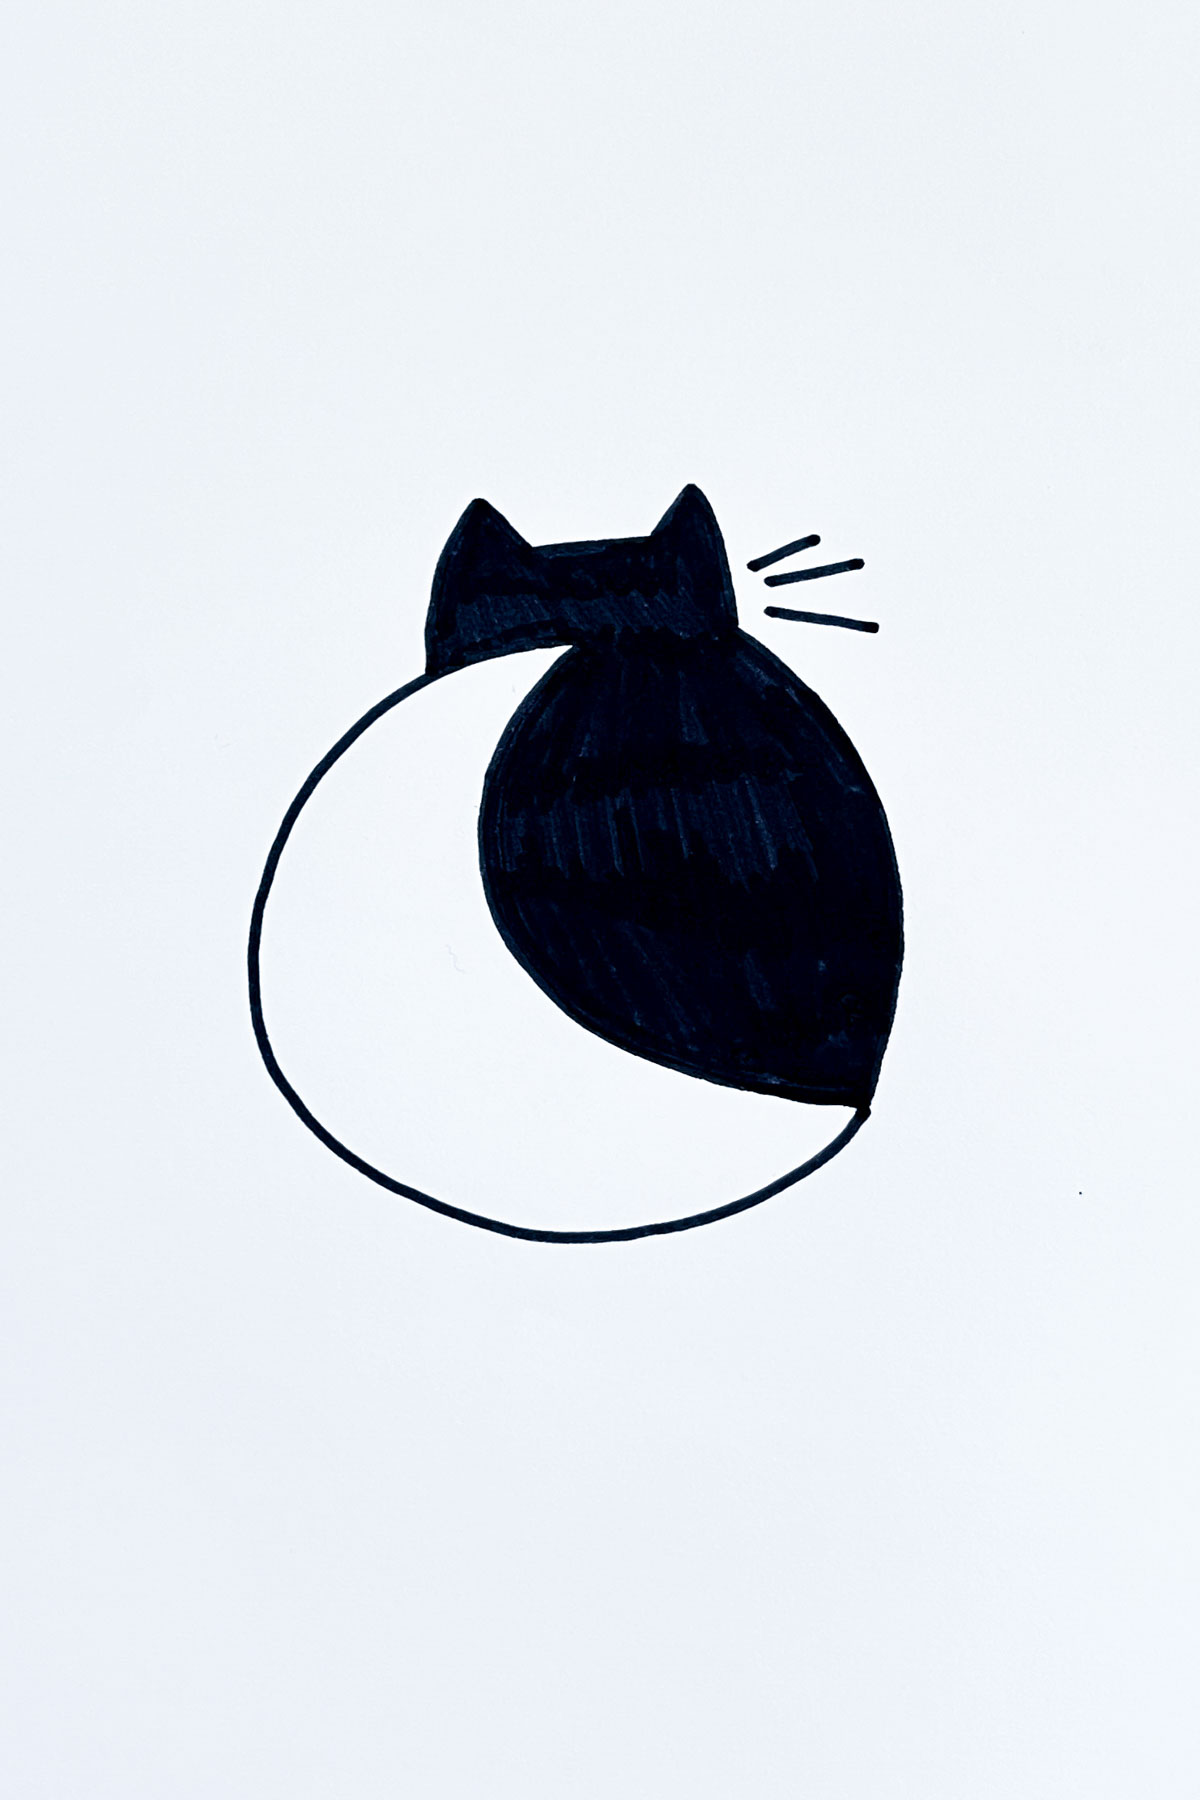 black cat moon drawing